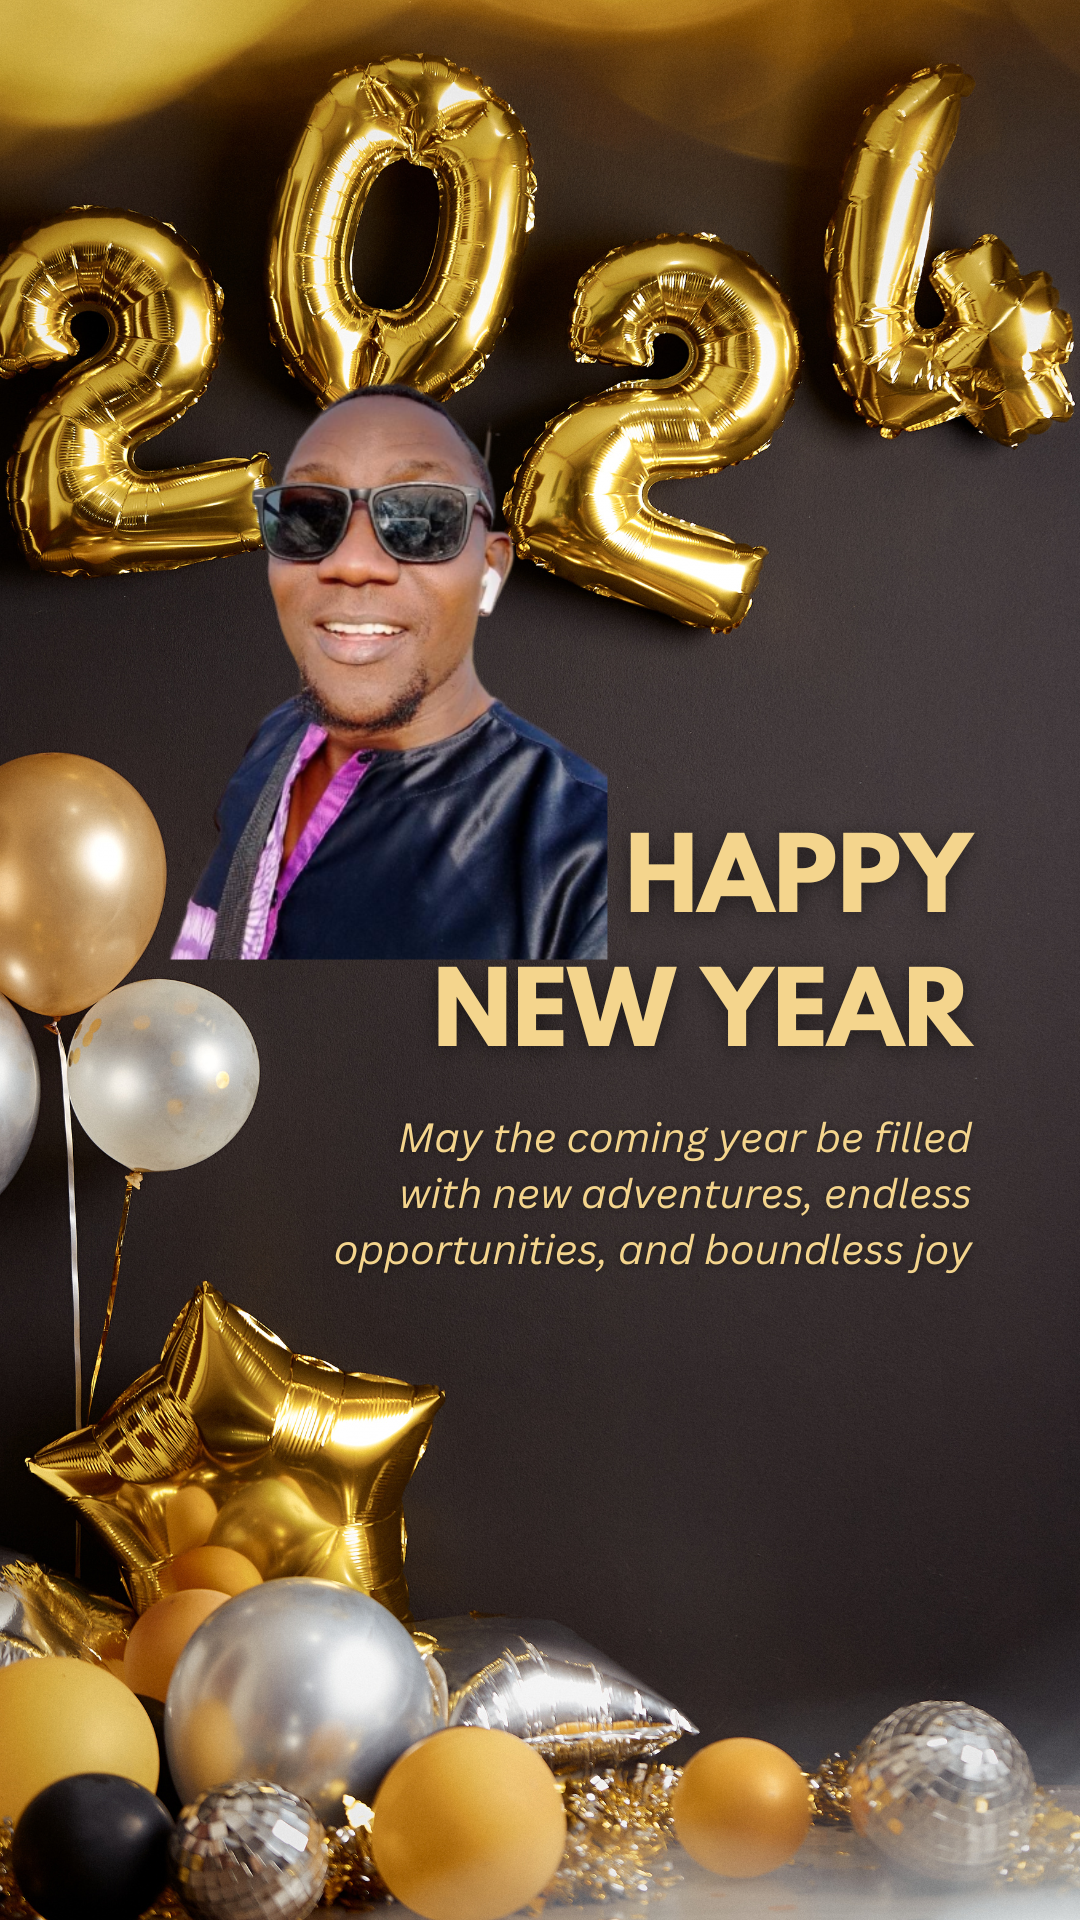 Tony Odijie wishes you A HAPPY NEW YEAR.